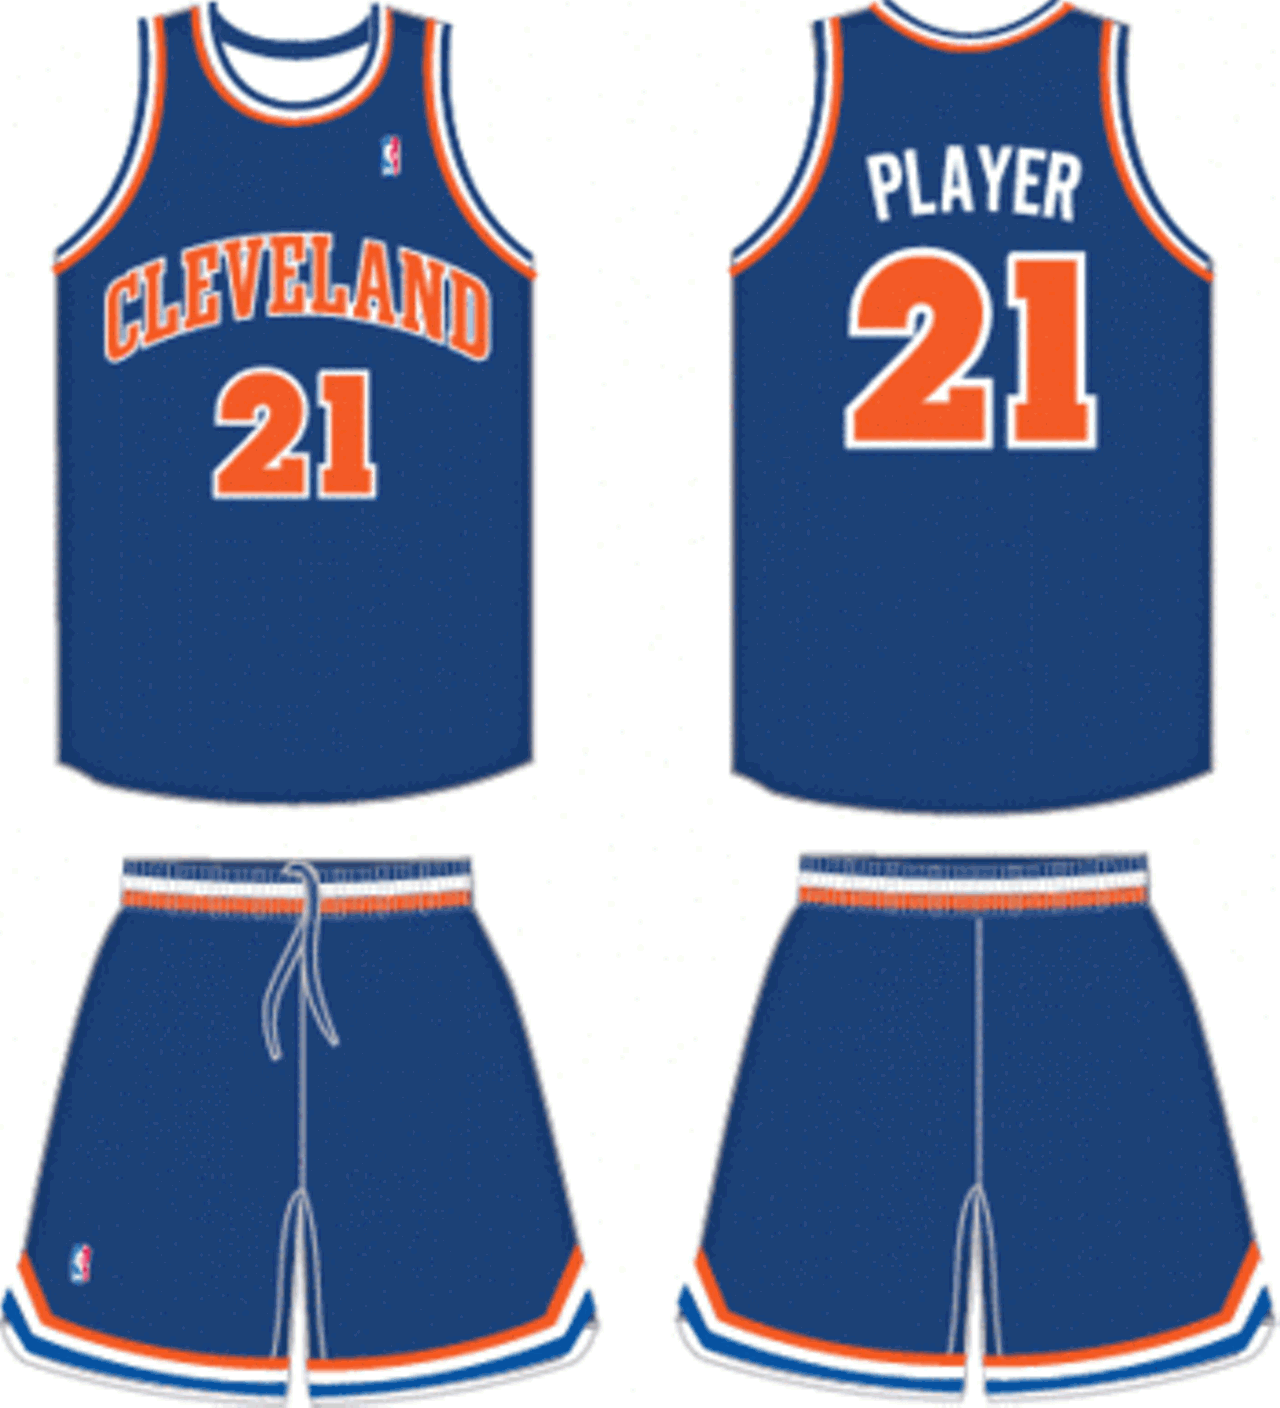 Cleveland Cavaliers' new uniform: Team reveals navy blue alternate